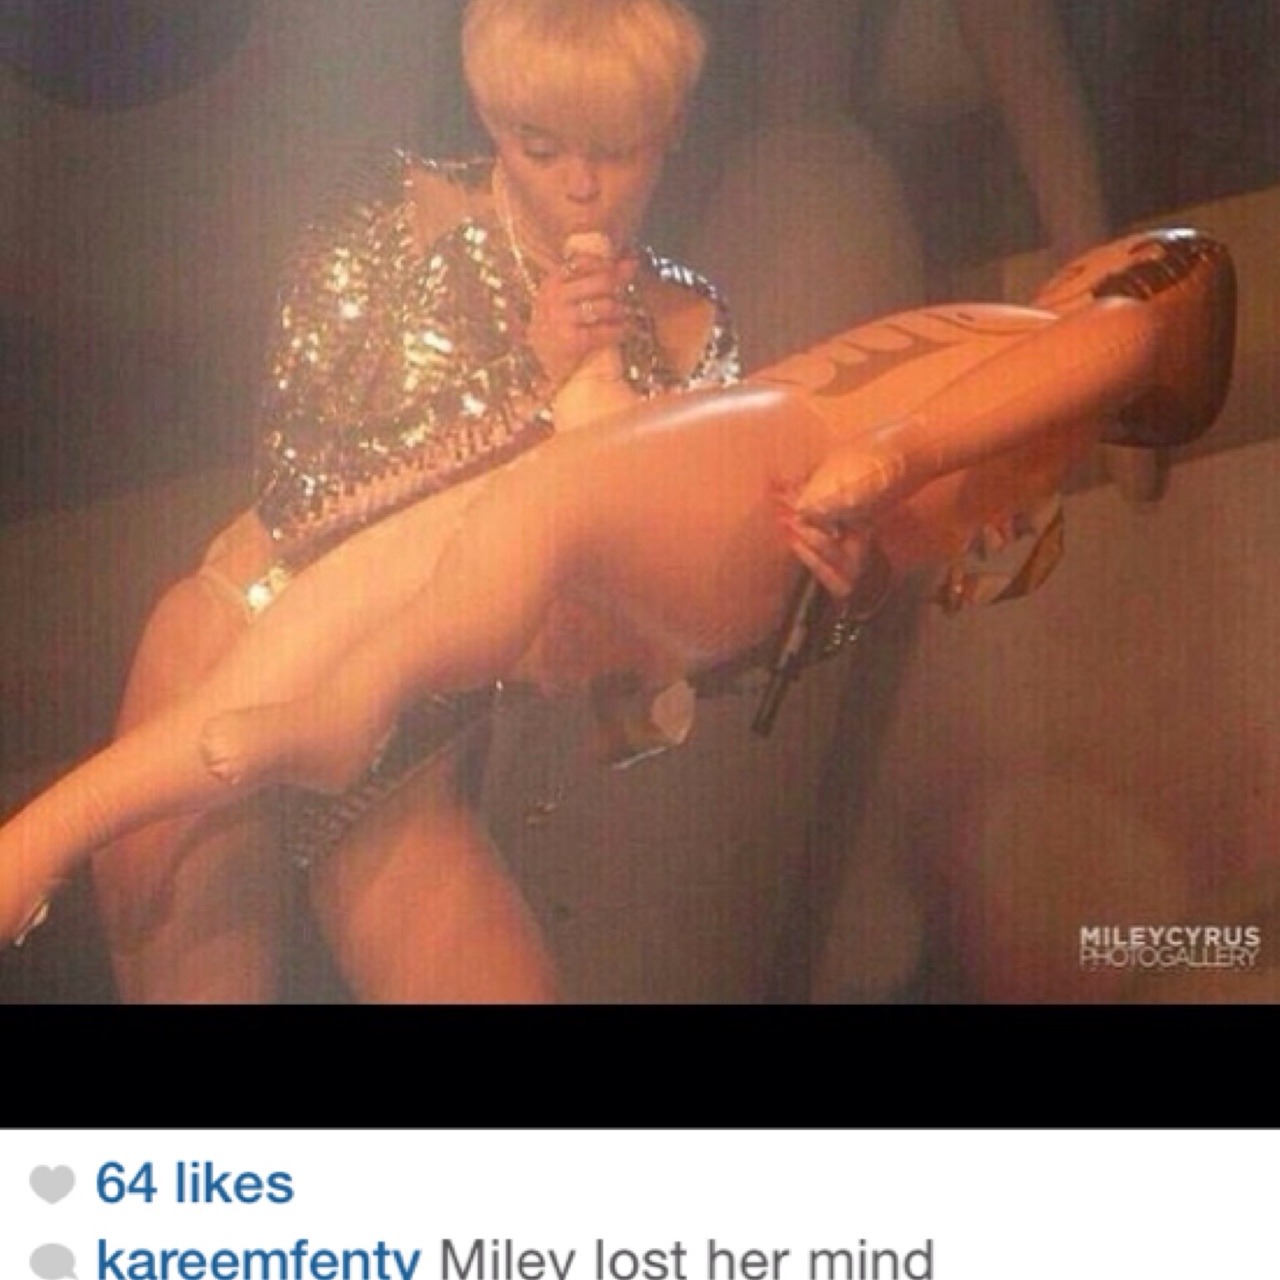 Miley cryus lal blowjob